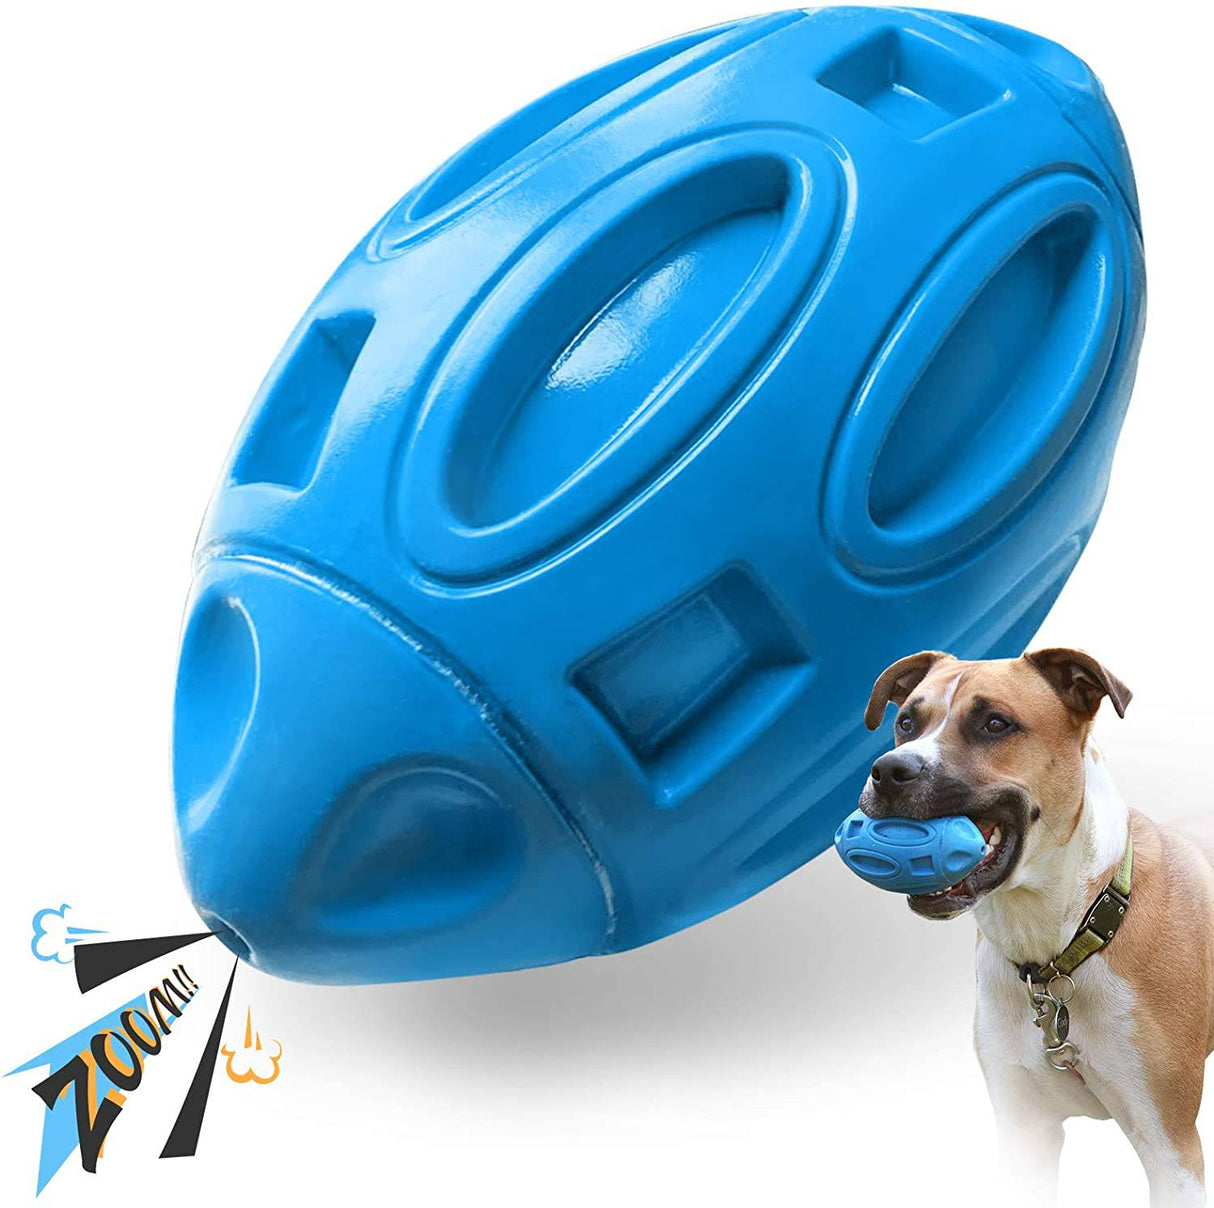 Animal Shop. Juguete interactivo para perros pelota